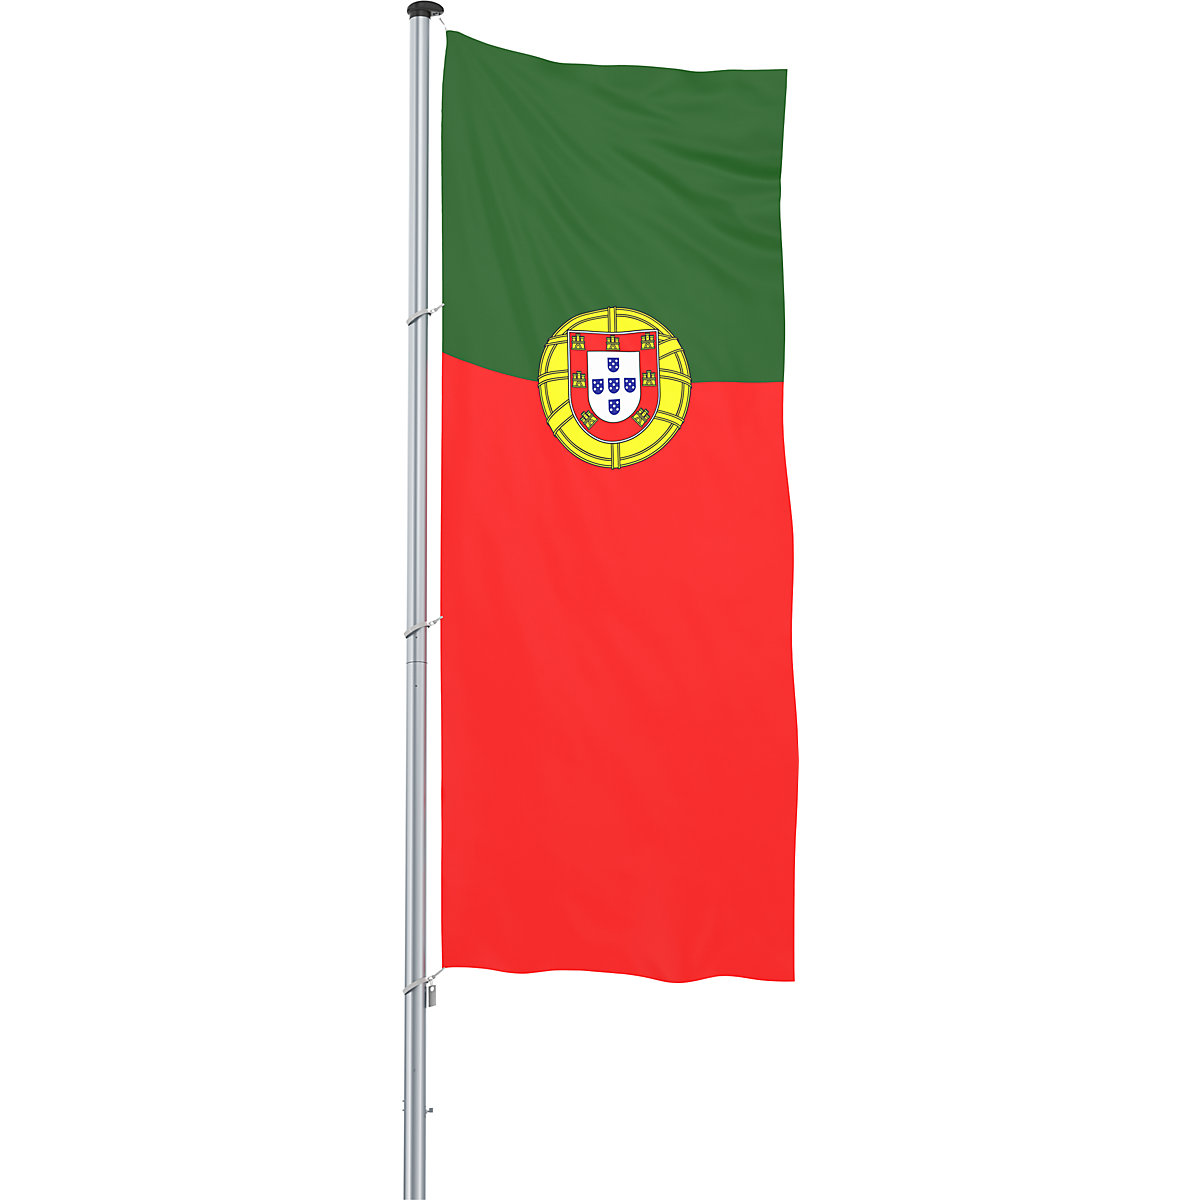 Mannus – Bandera para izar/bandera del país, formato 1,2 x 3 m, Portugal